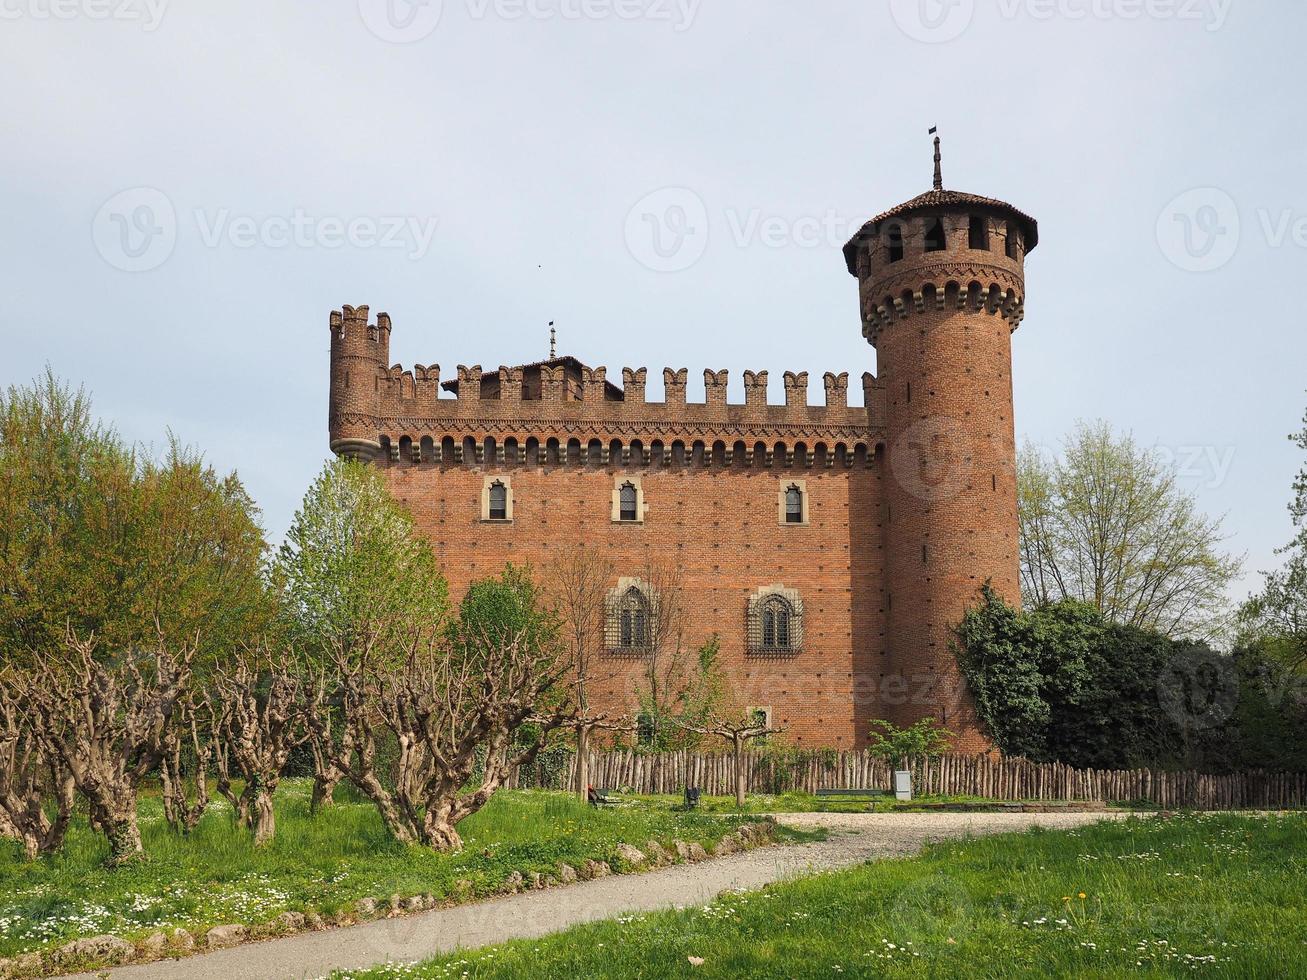 medeltida slott i Turin foto